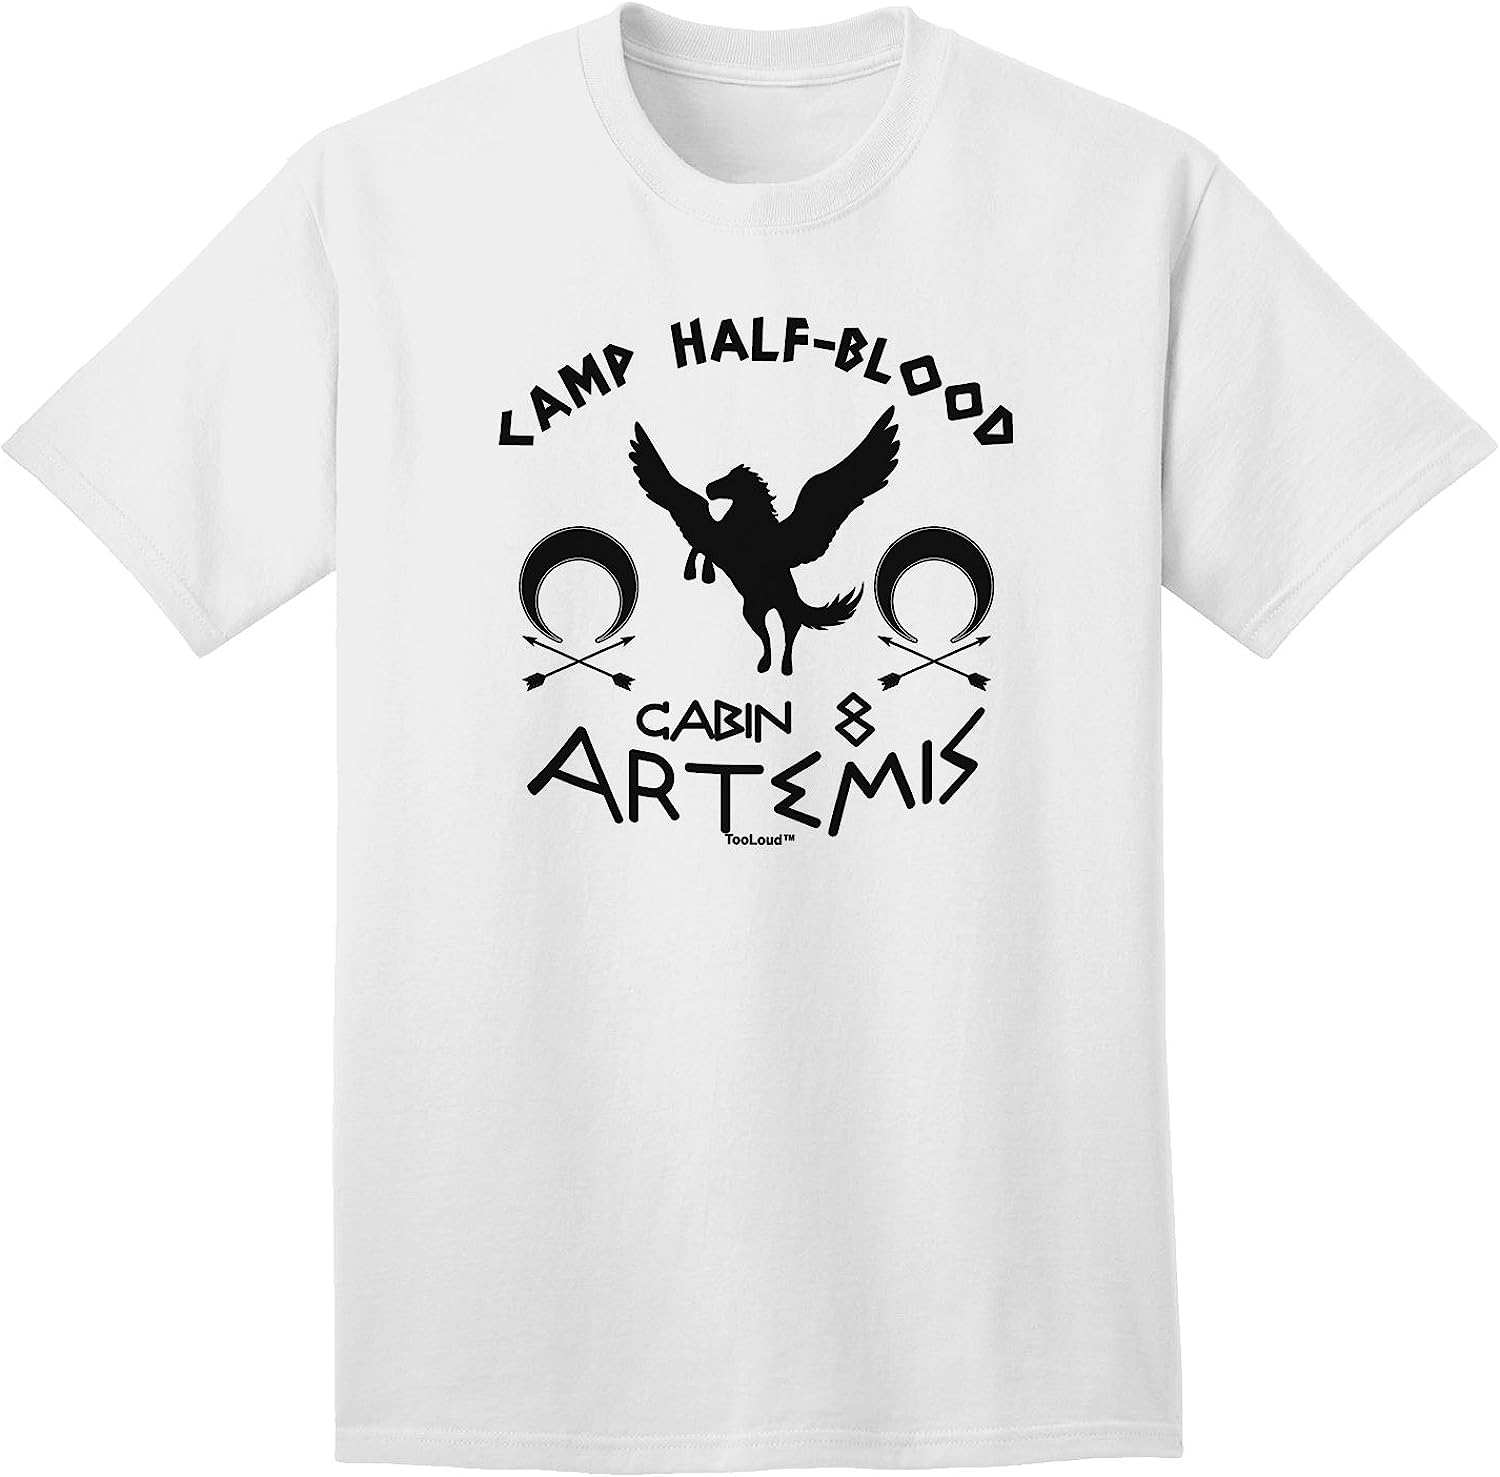 CAMP HALF BLOOD - Percy Jackson Graphic T-Shirt Dress by Barhum-Medina